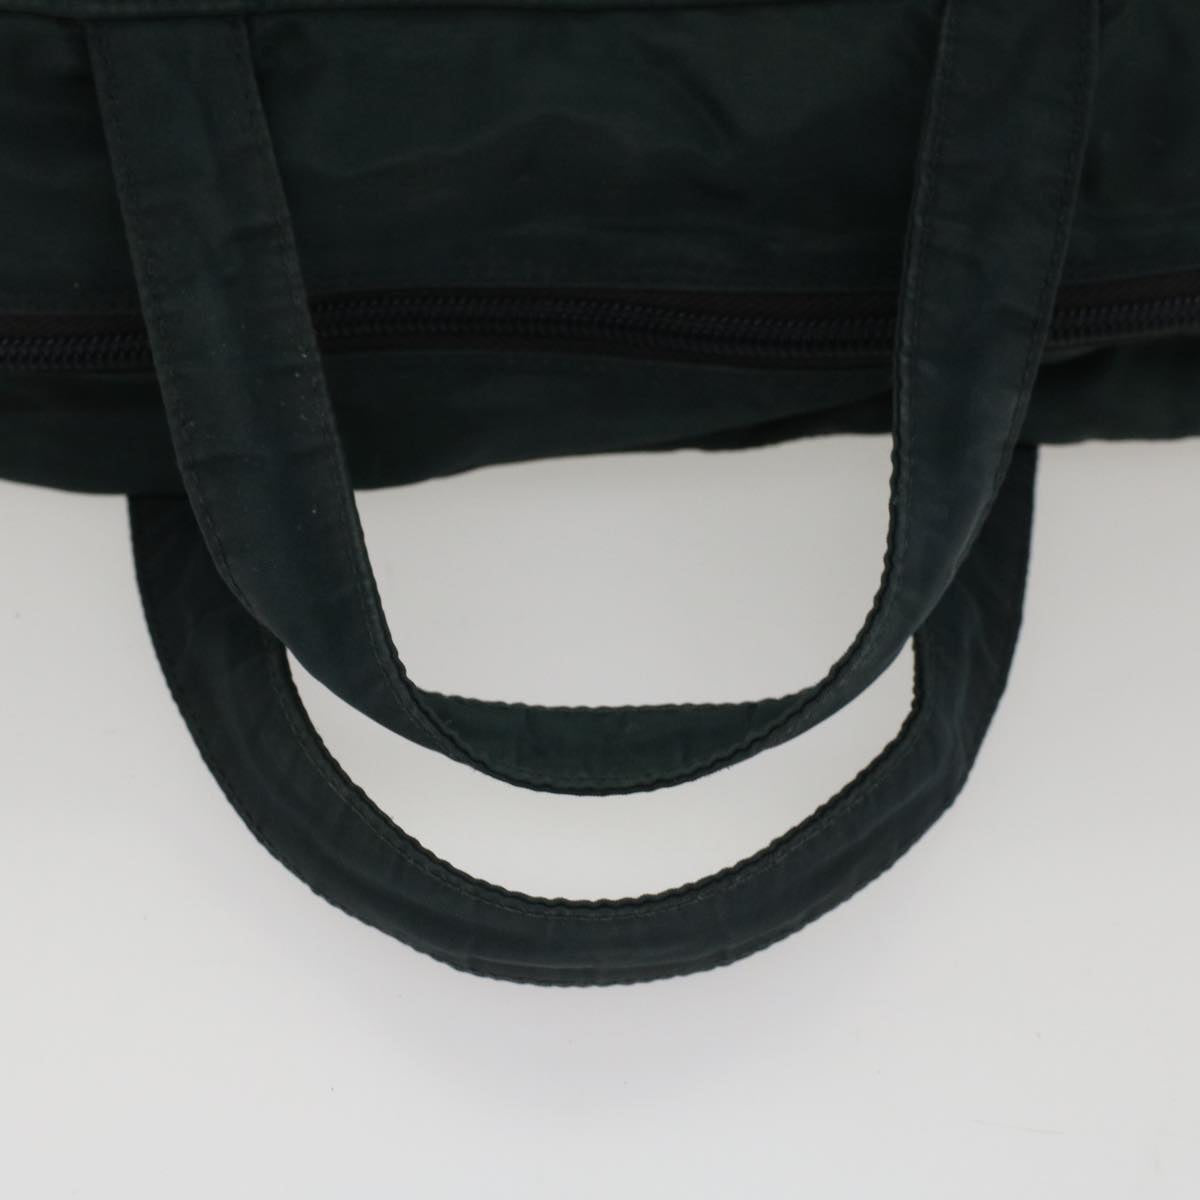 PRADA Hand Bag Nylon Blue Green Auth bs8168